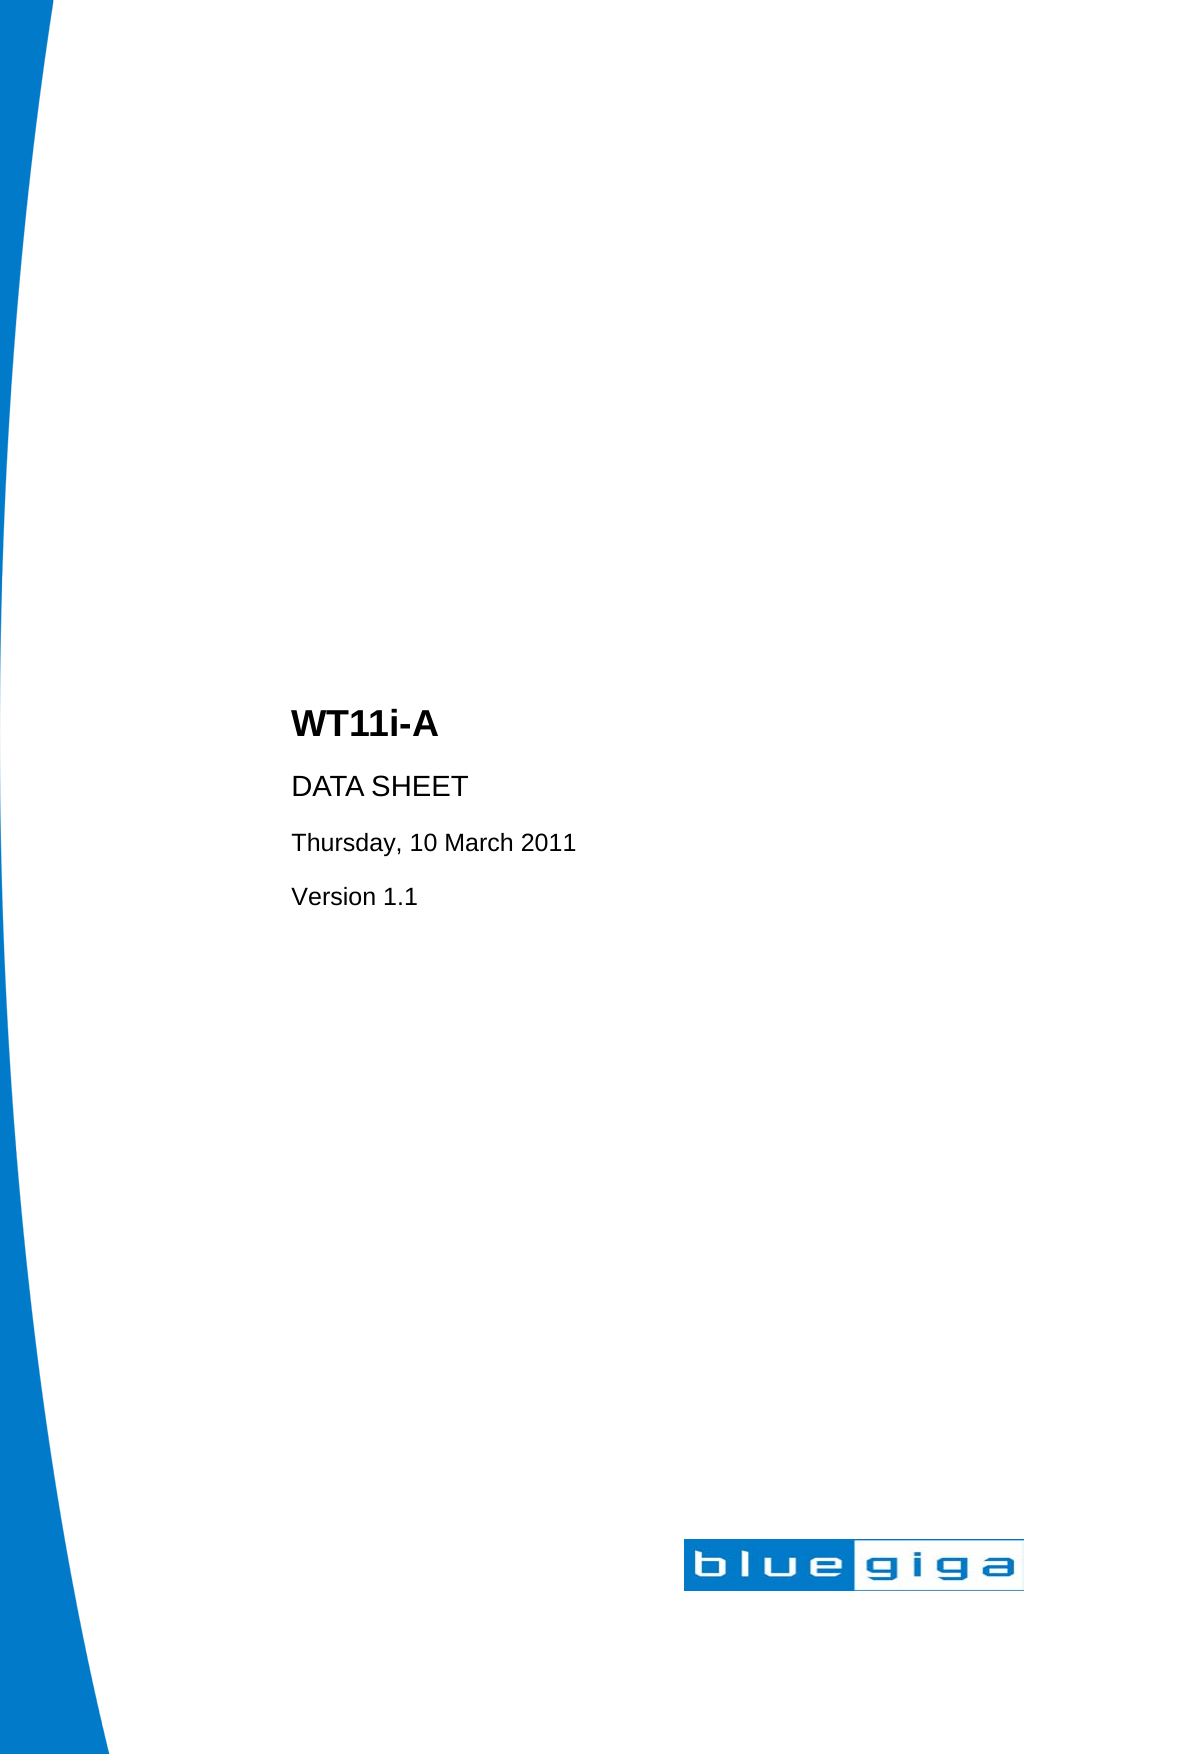                        WT11i-A DATA SHEET Thursday, 10 March 2011 Version 1.1  